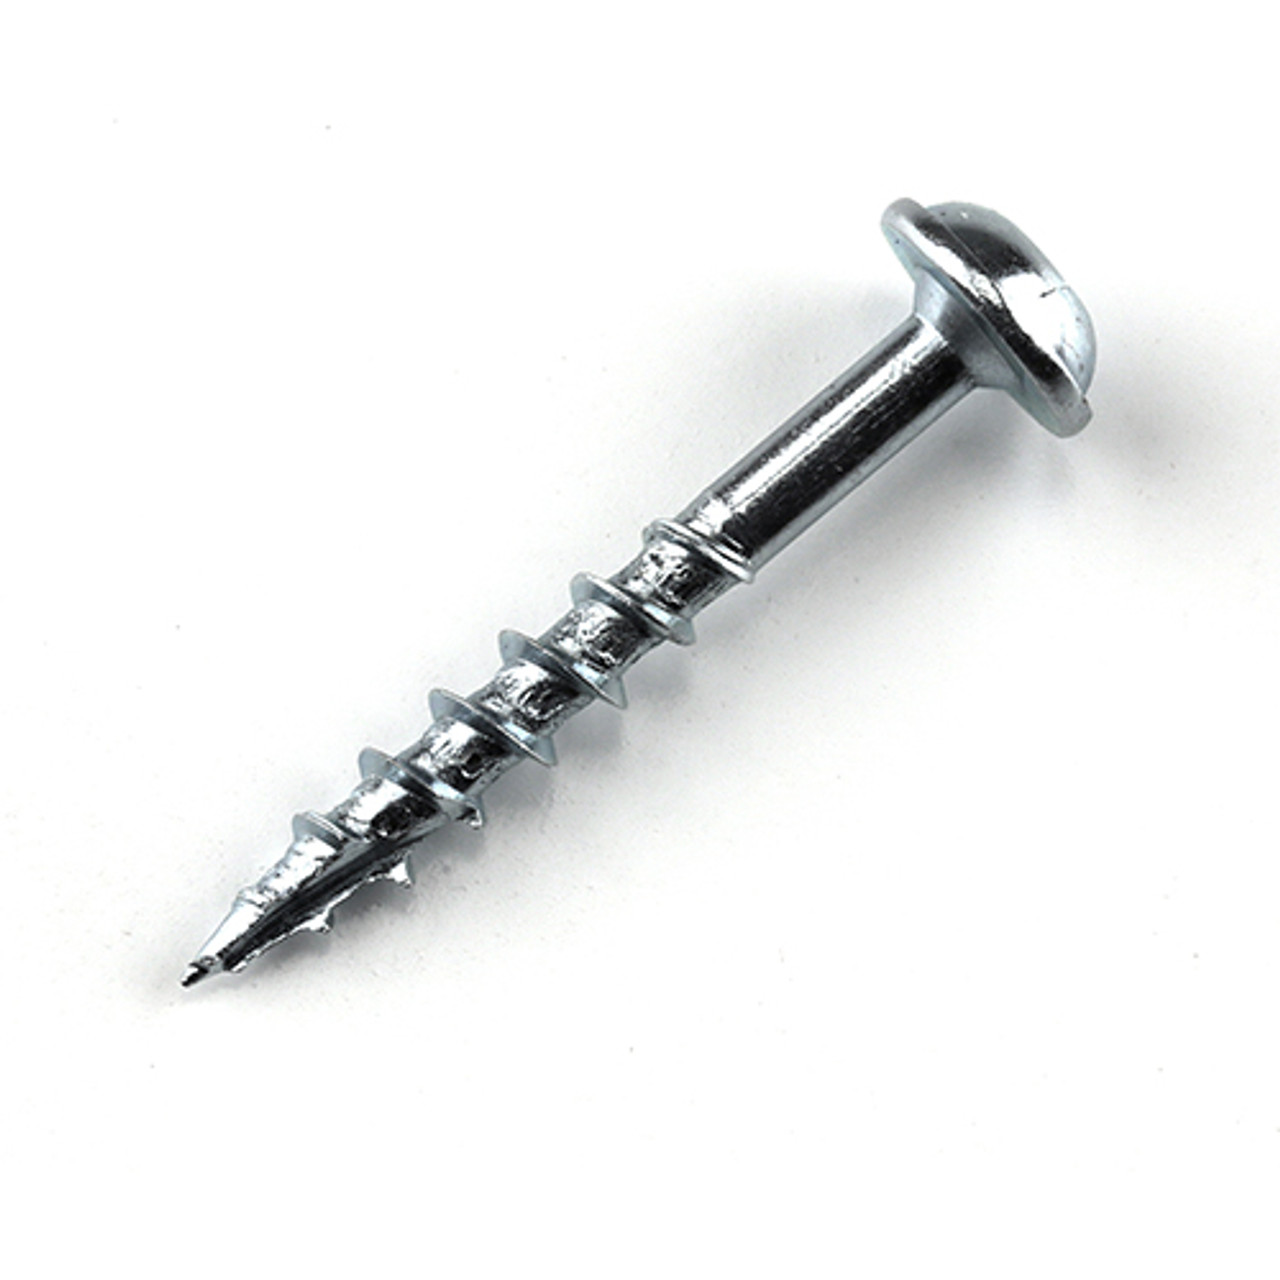 Kreg Pocket Hole Screws, 1-1/4" Coarse Thread, Washer-Head, 250Pk